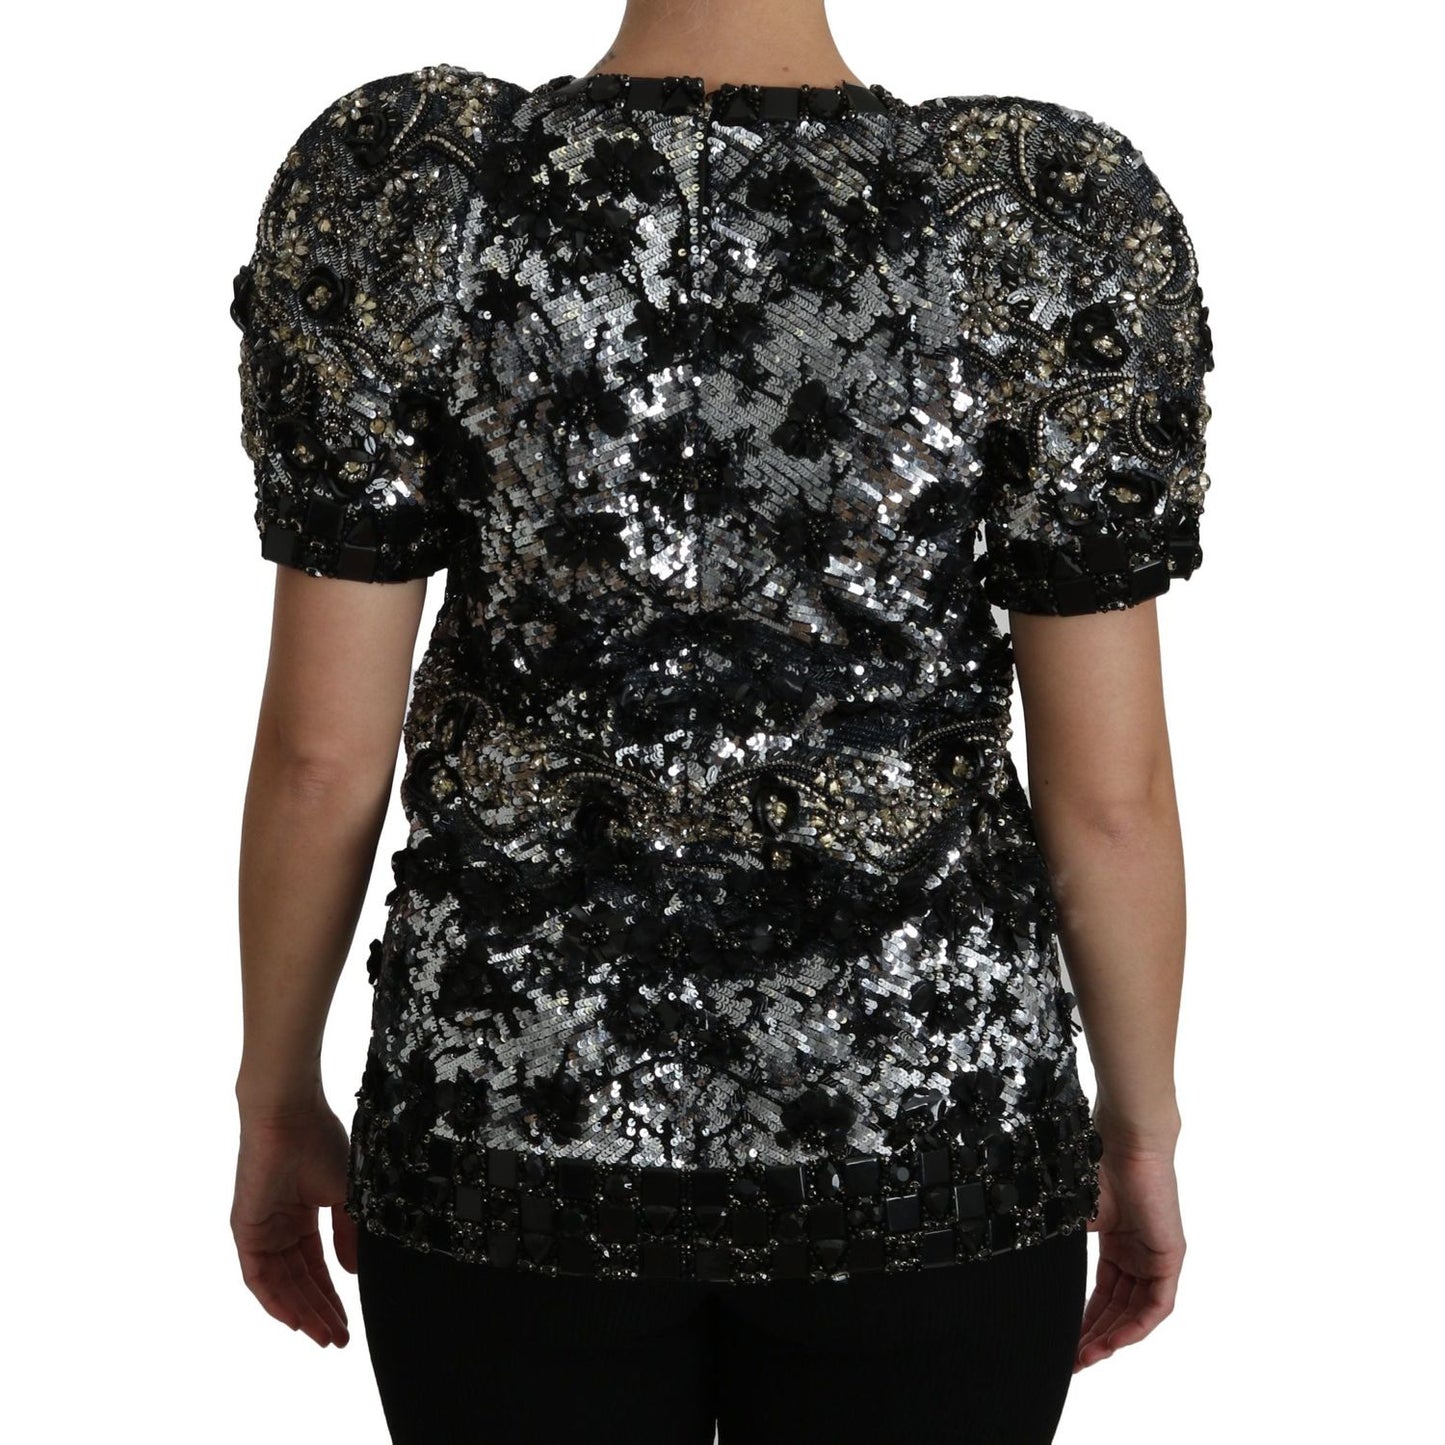 Dolce & Gabbana Sequined Crystal Embellished Crew Neck Top black-sequined-crystal-embellished-top-blouse